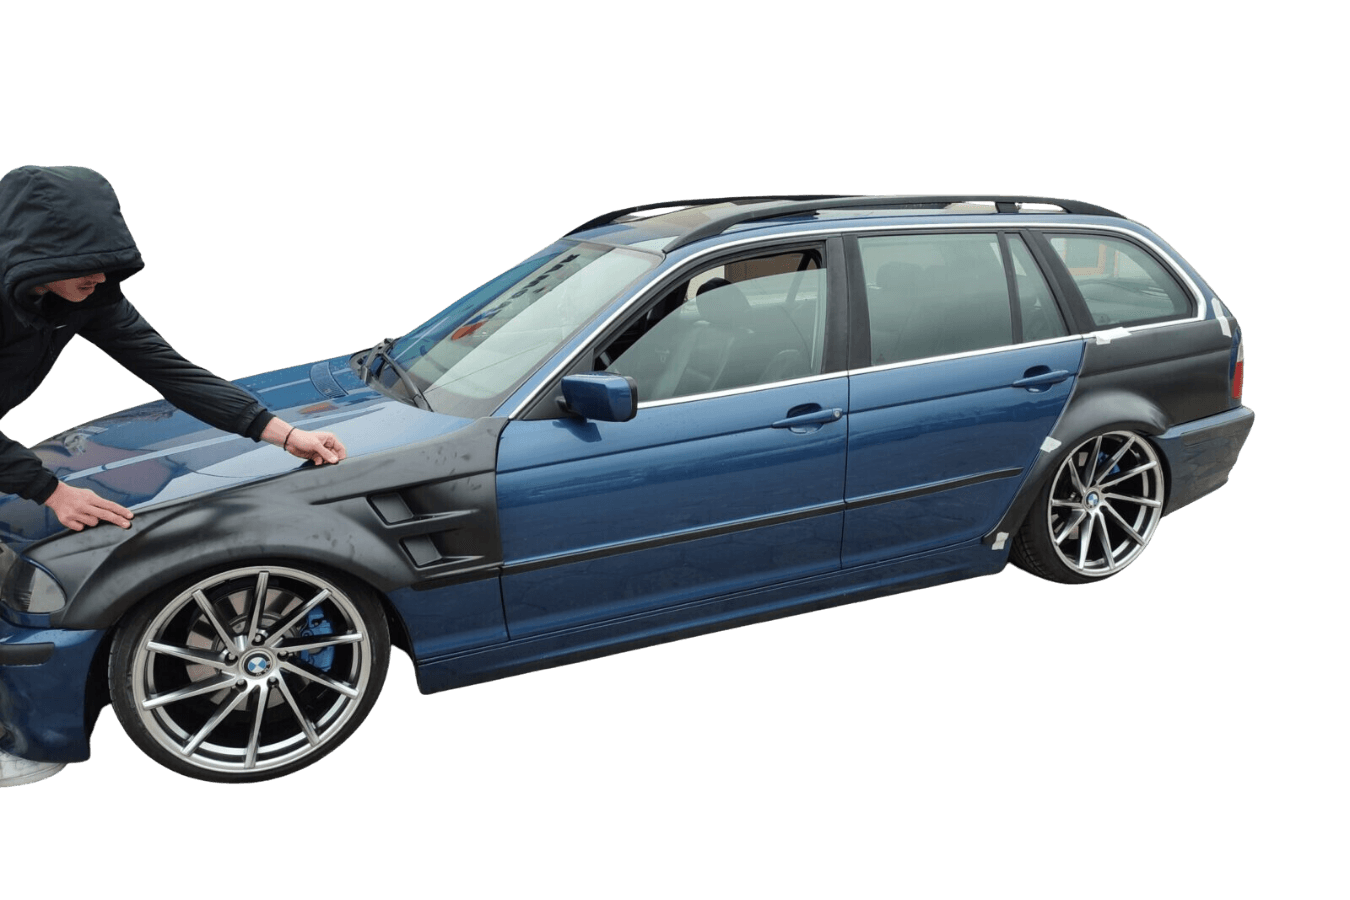 BMW E46 Touring Series 3 Wide Body Kits (1997 - 2005)